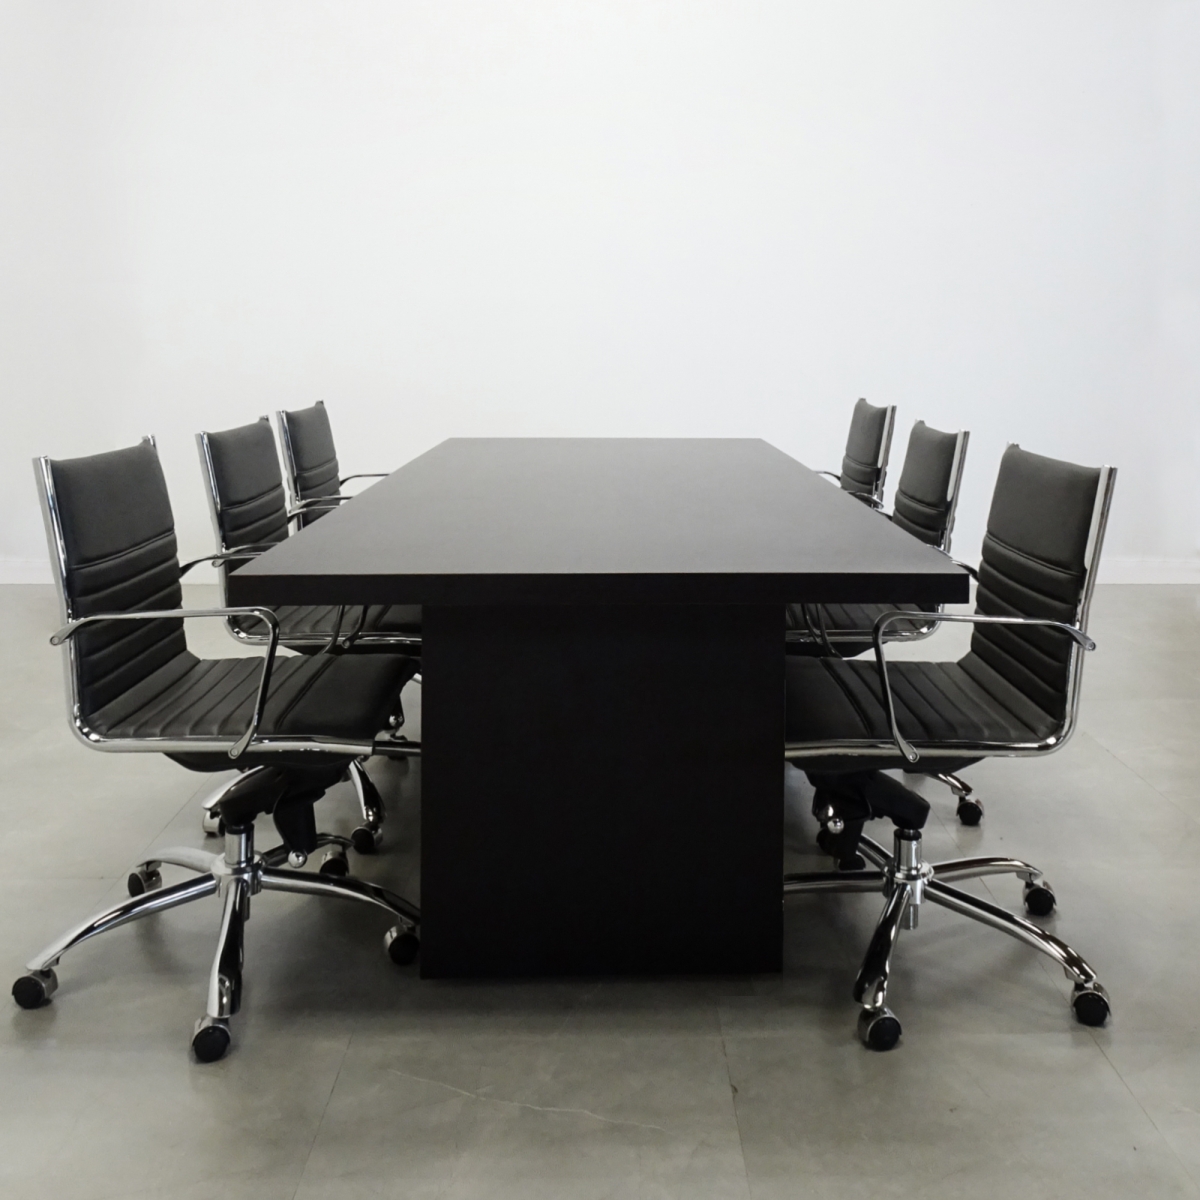 Axis Rectangular Meeting Table